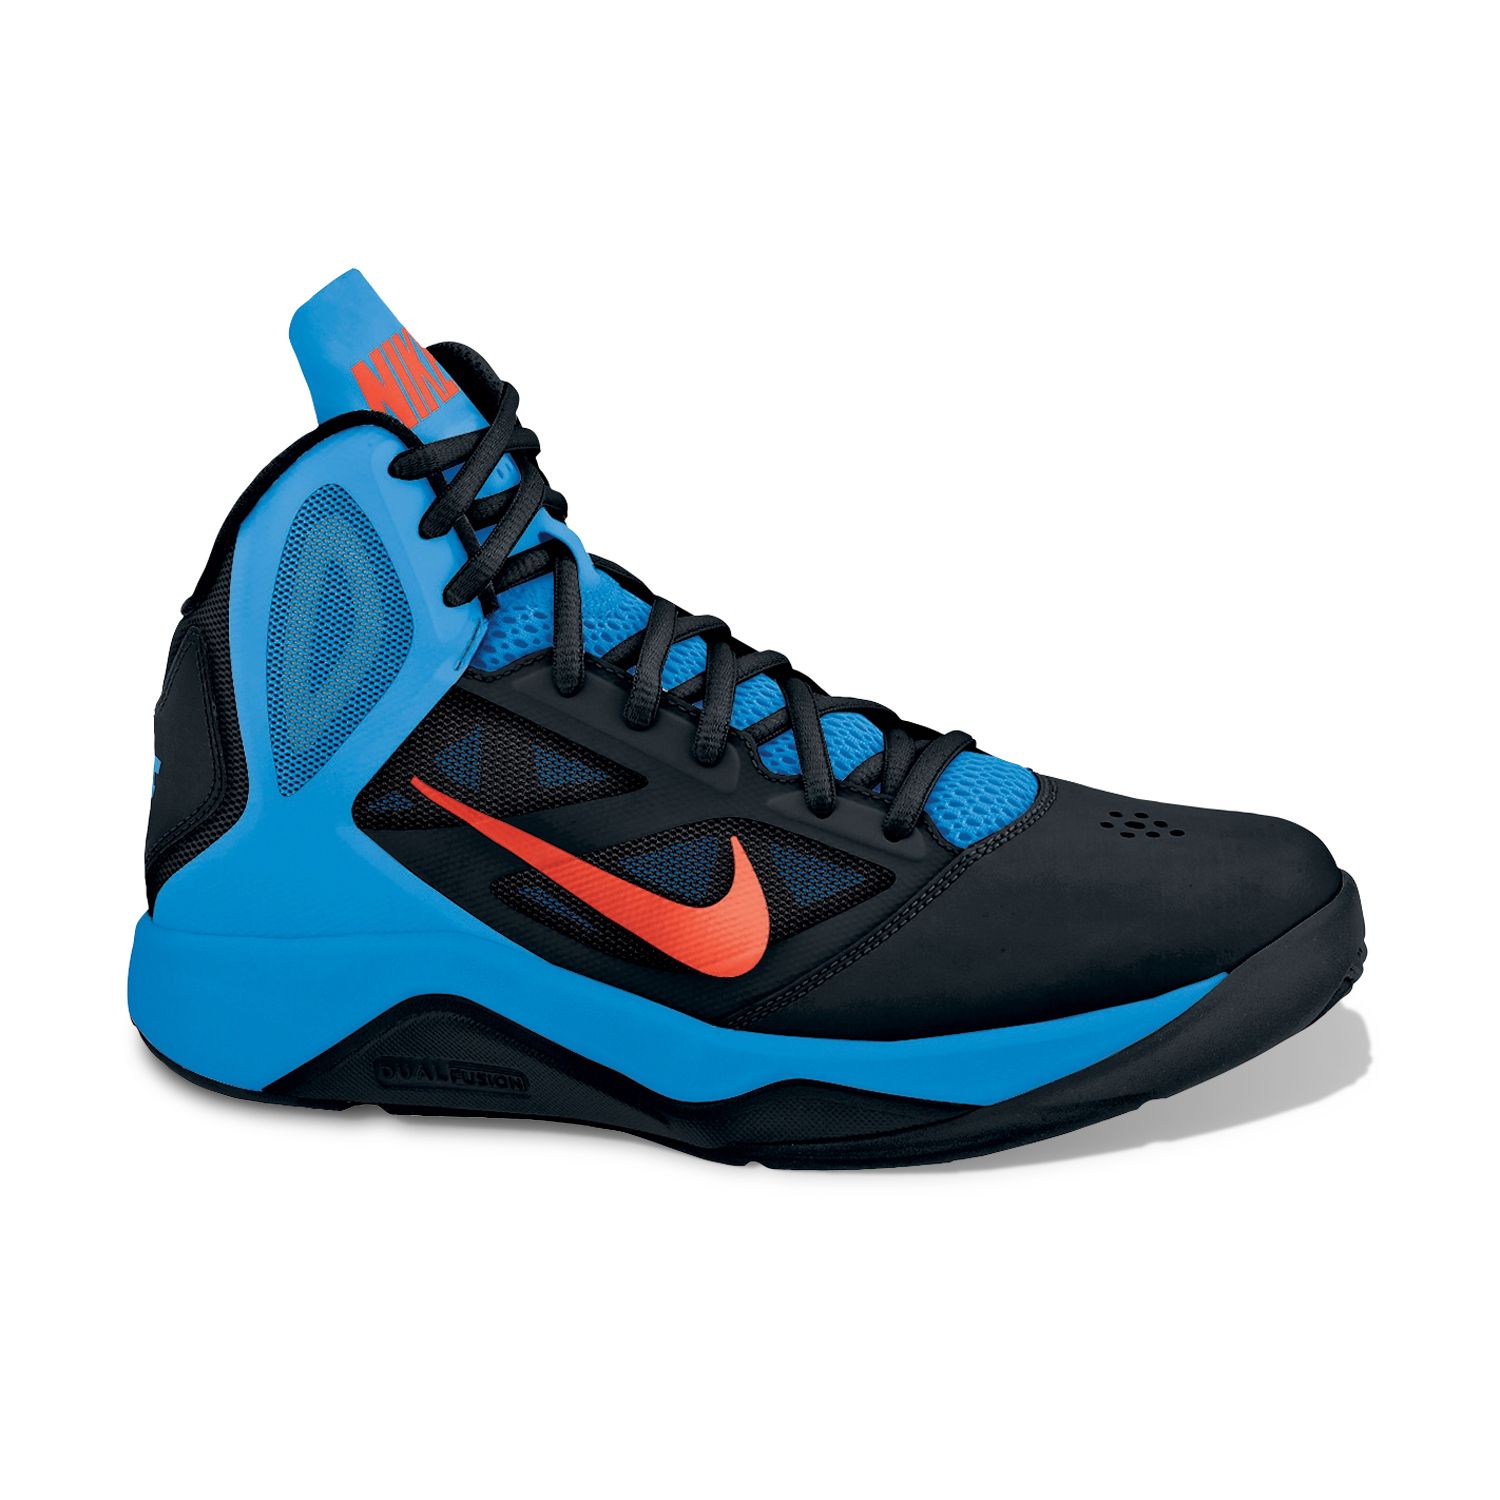 Nike Dual Fusion II Basketball Shoes - Men